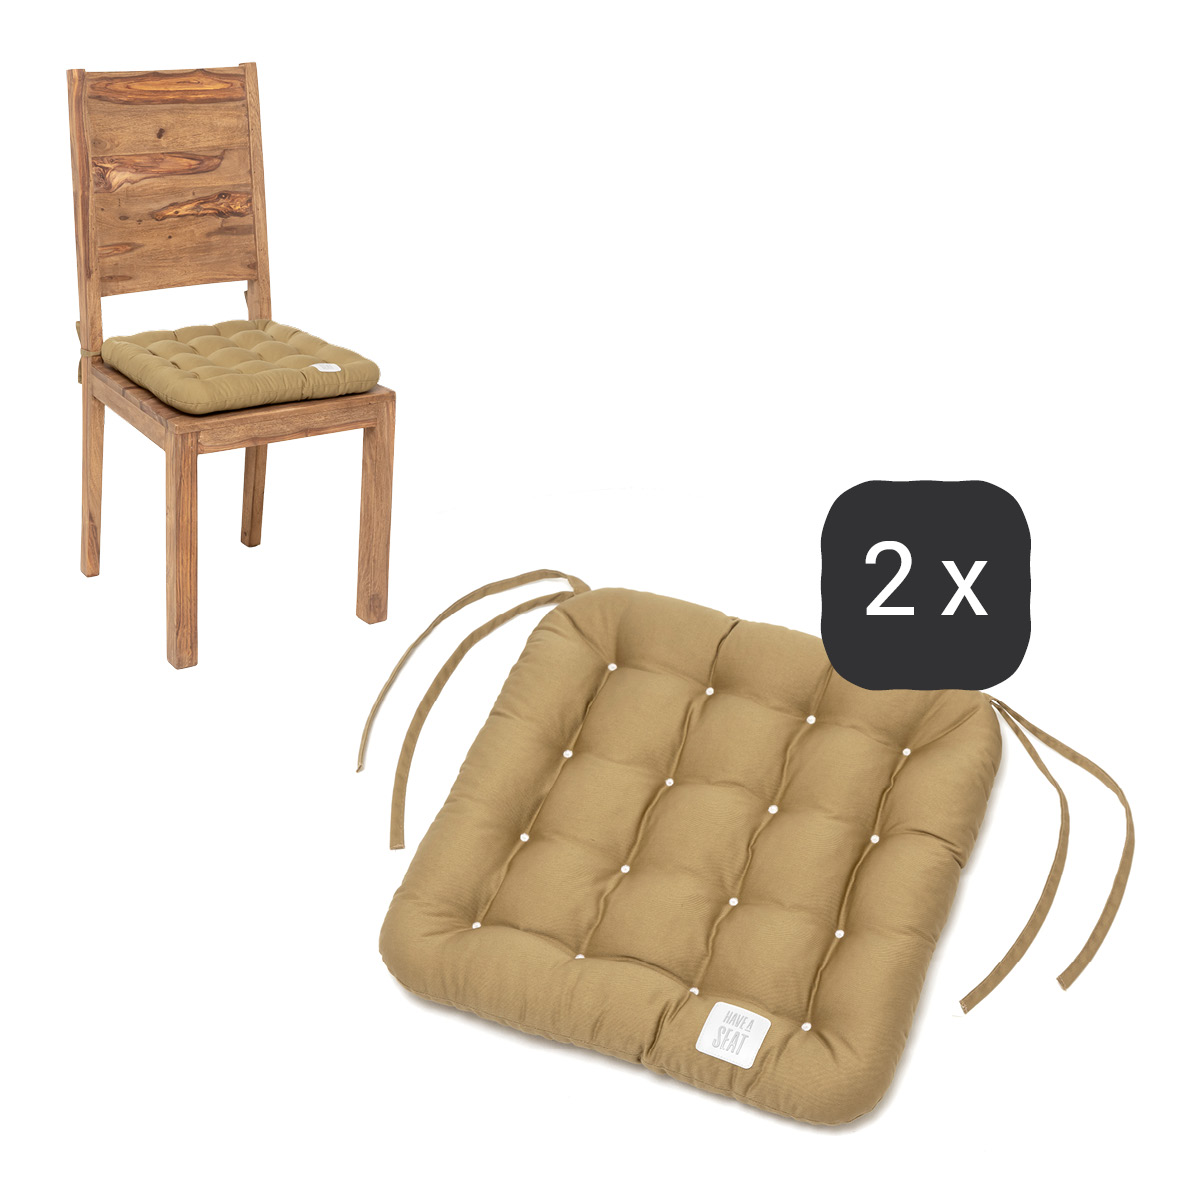 Stuhlkissen 40 x 40 cm / Beige | 2er Set | Premium-Sitzkomfort | Indoor / Outdoor | waschbar bis 95°C | Allergiker geeignet | HAVE A SEAT Living